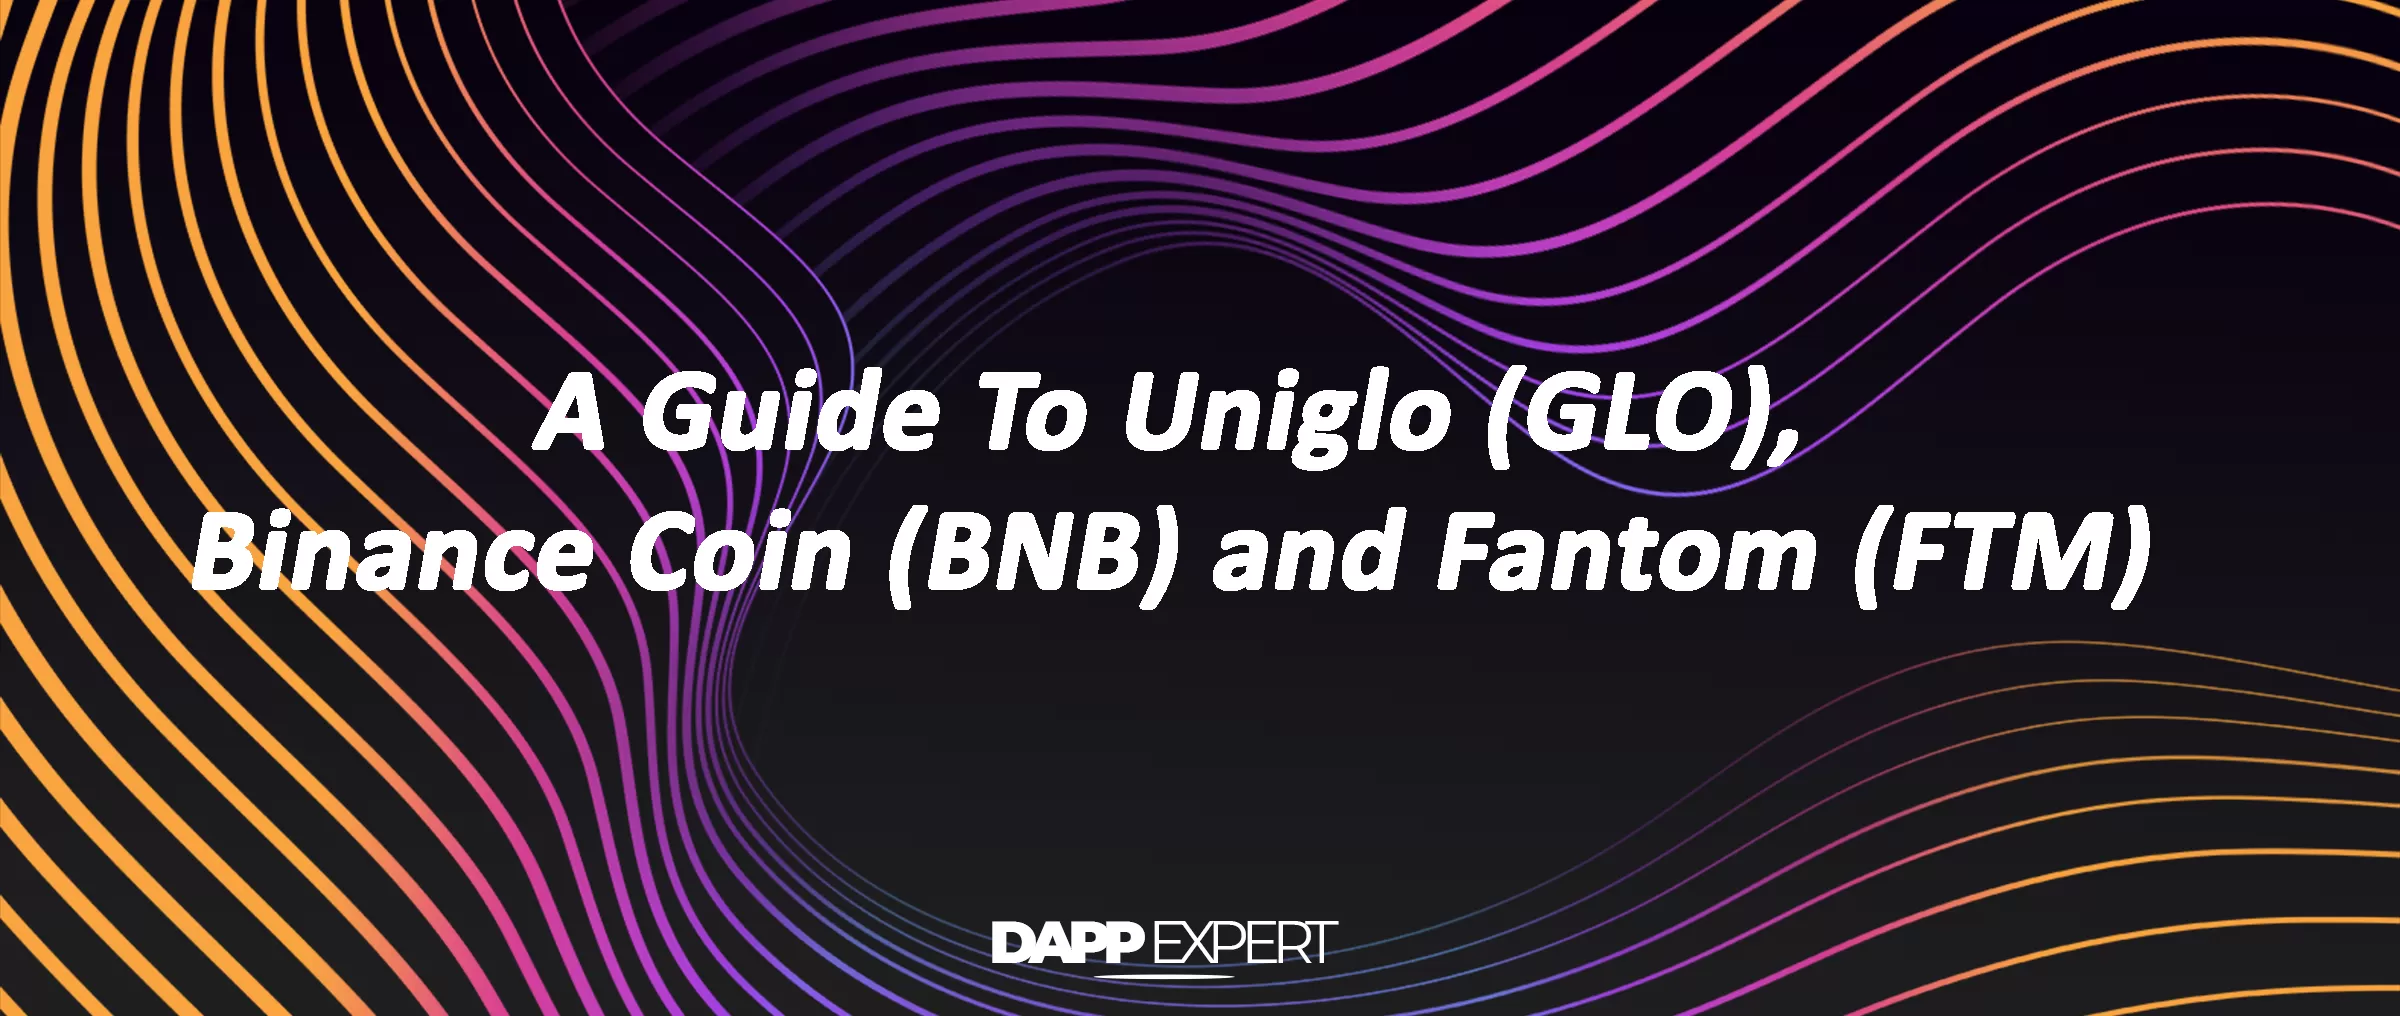 A Guide To Uniglo (GLO), Binance Coin (BNB) And Fantom (FTM)